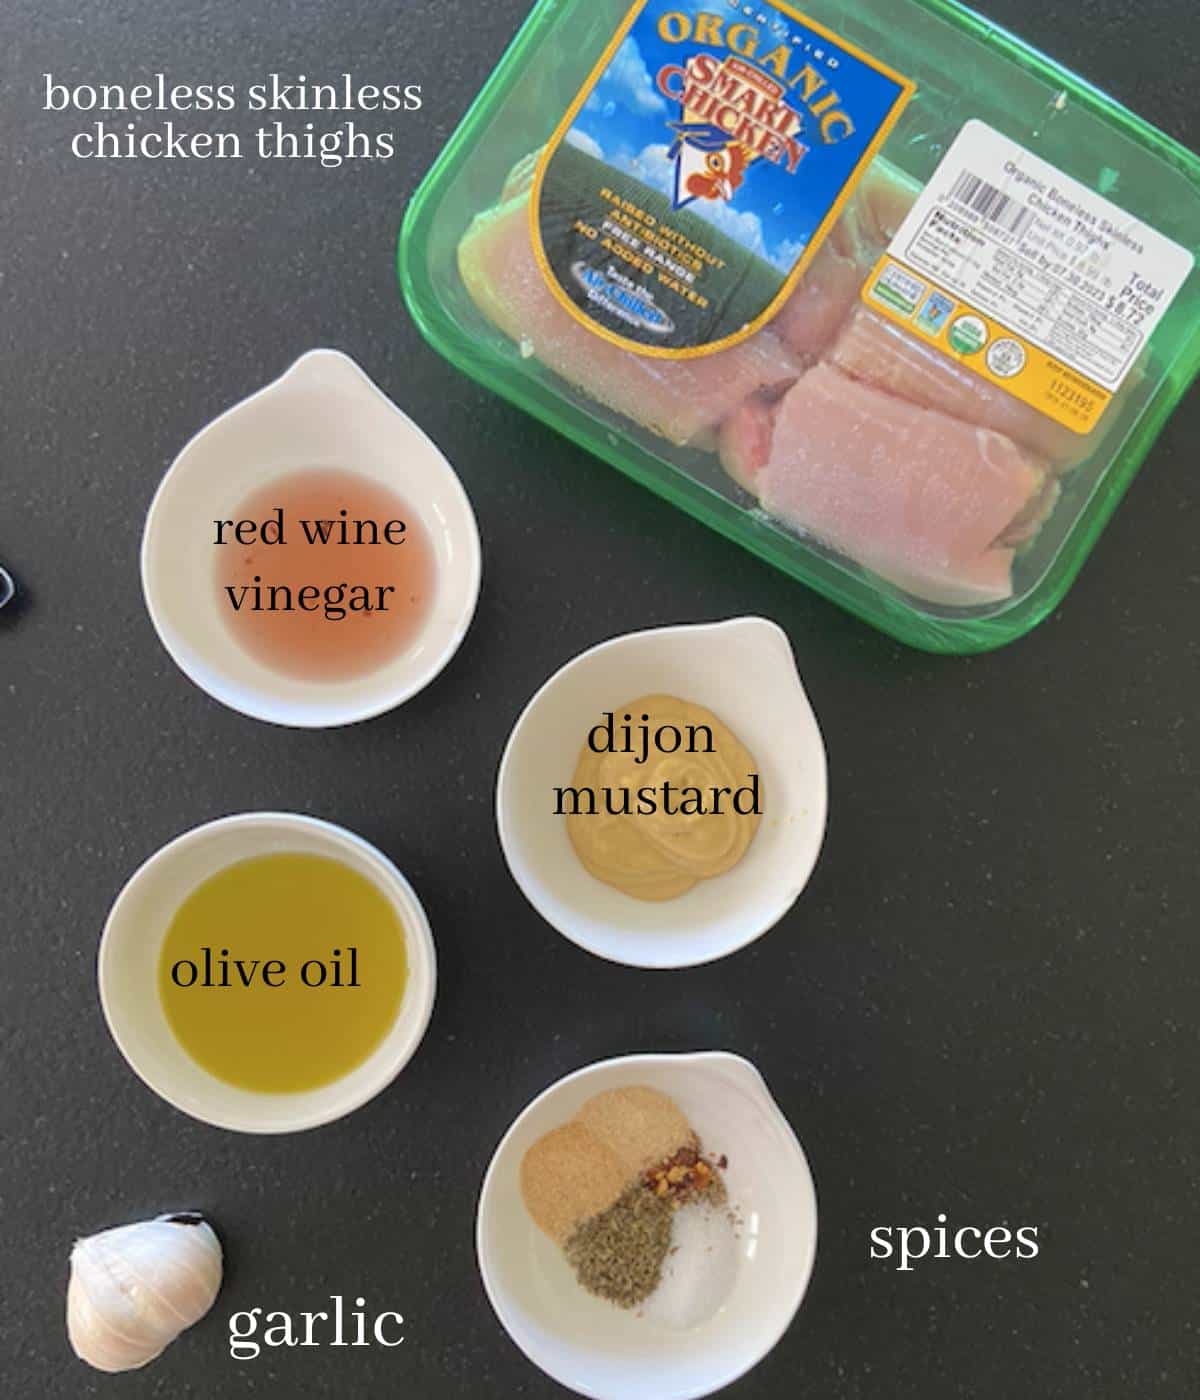 Boneless chicken thigh recipe ingredients on countertop.